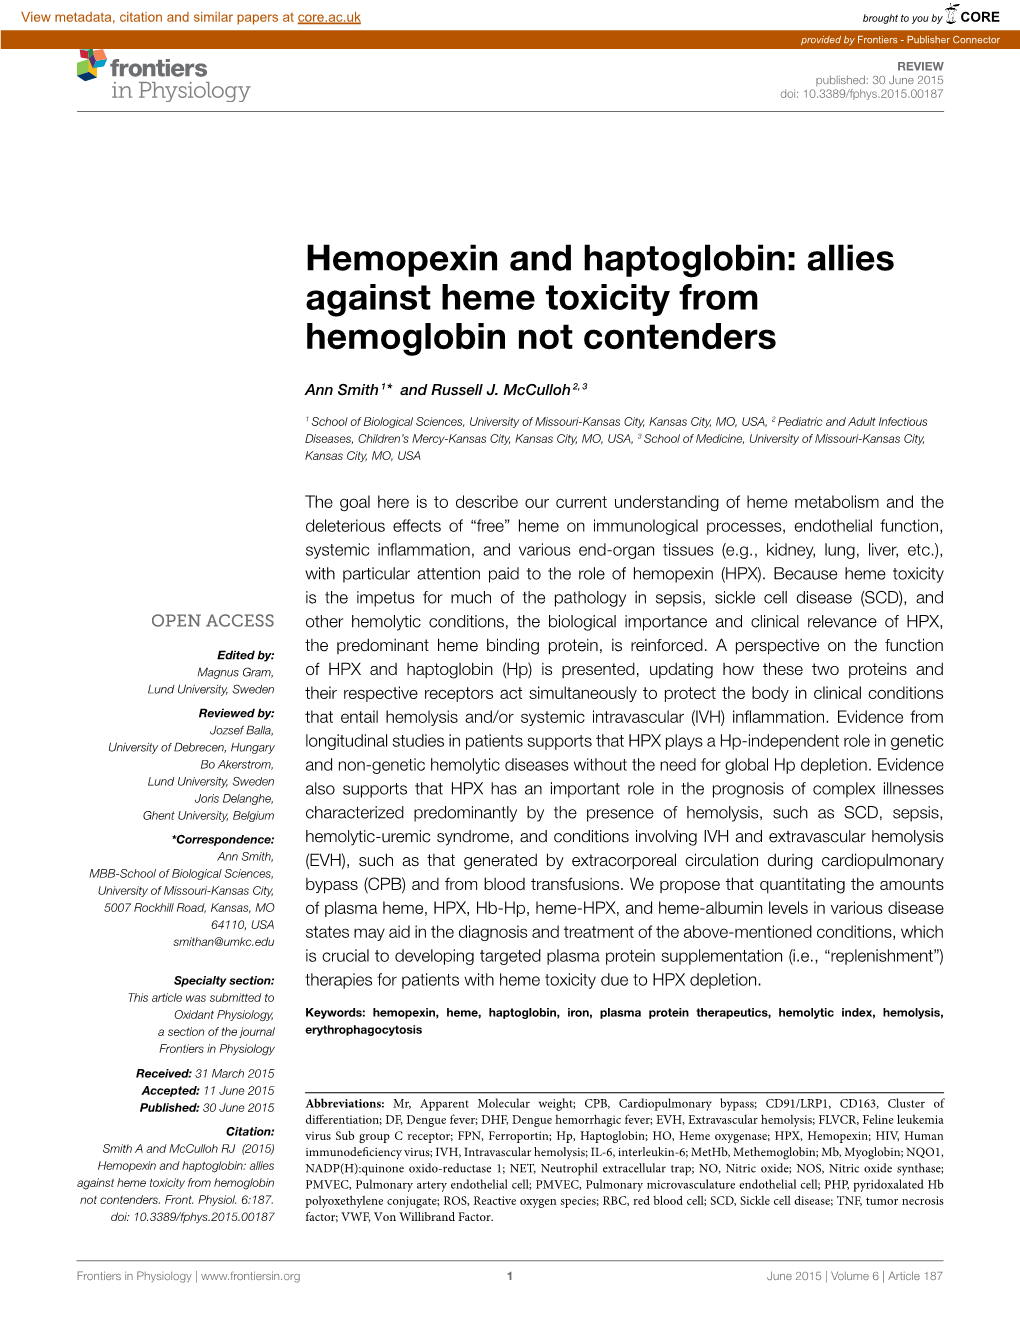 Hemopexin and Haptoglobin: Allies Against Heme Toxicity from Hemoglobin Not Contenders